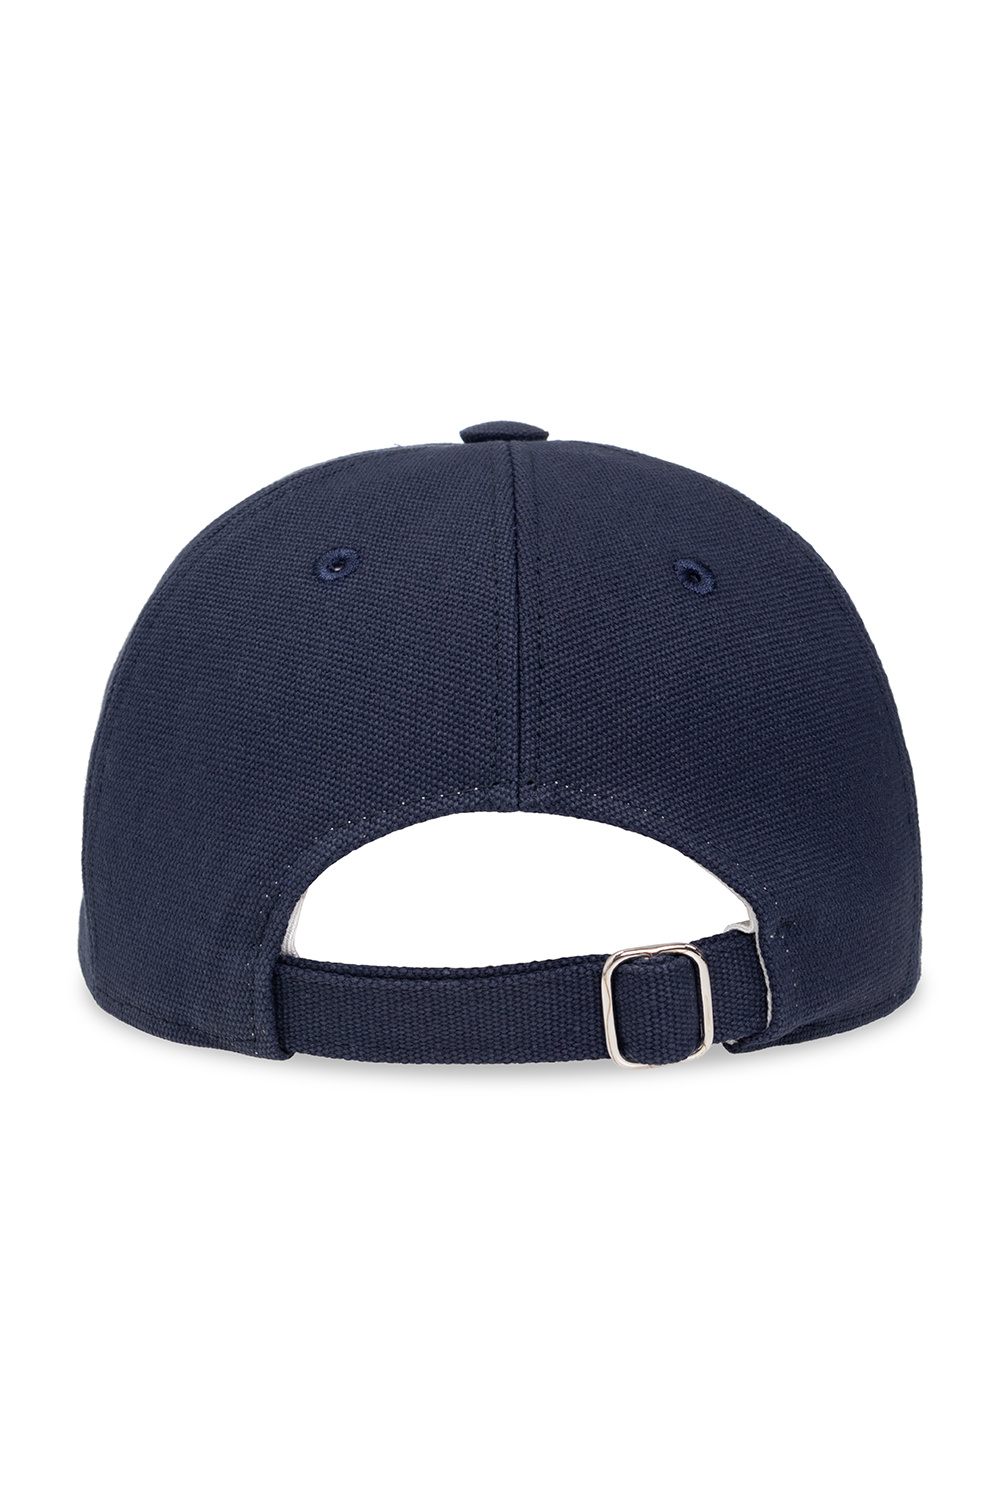 Bonpoint  Baseball Shield cap